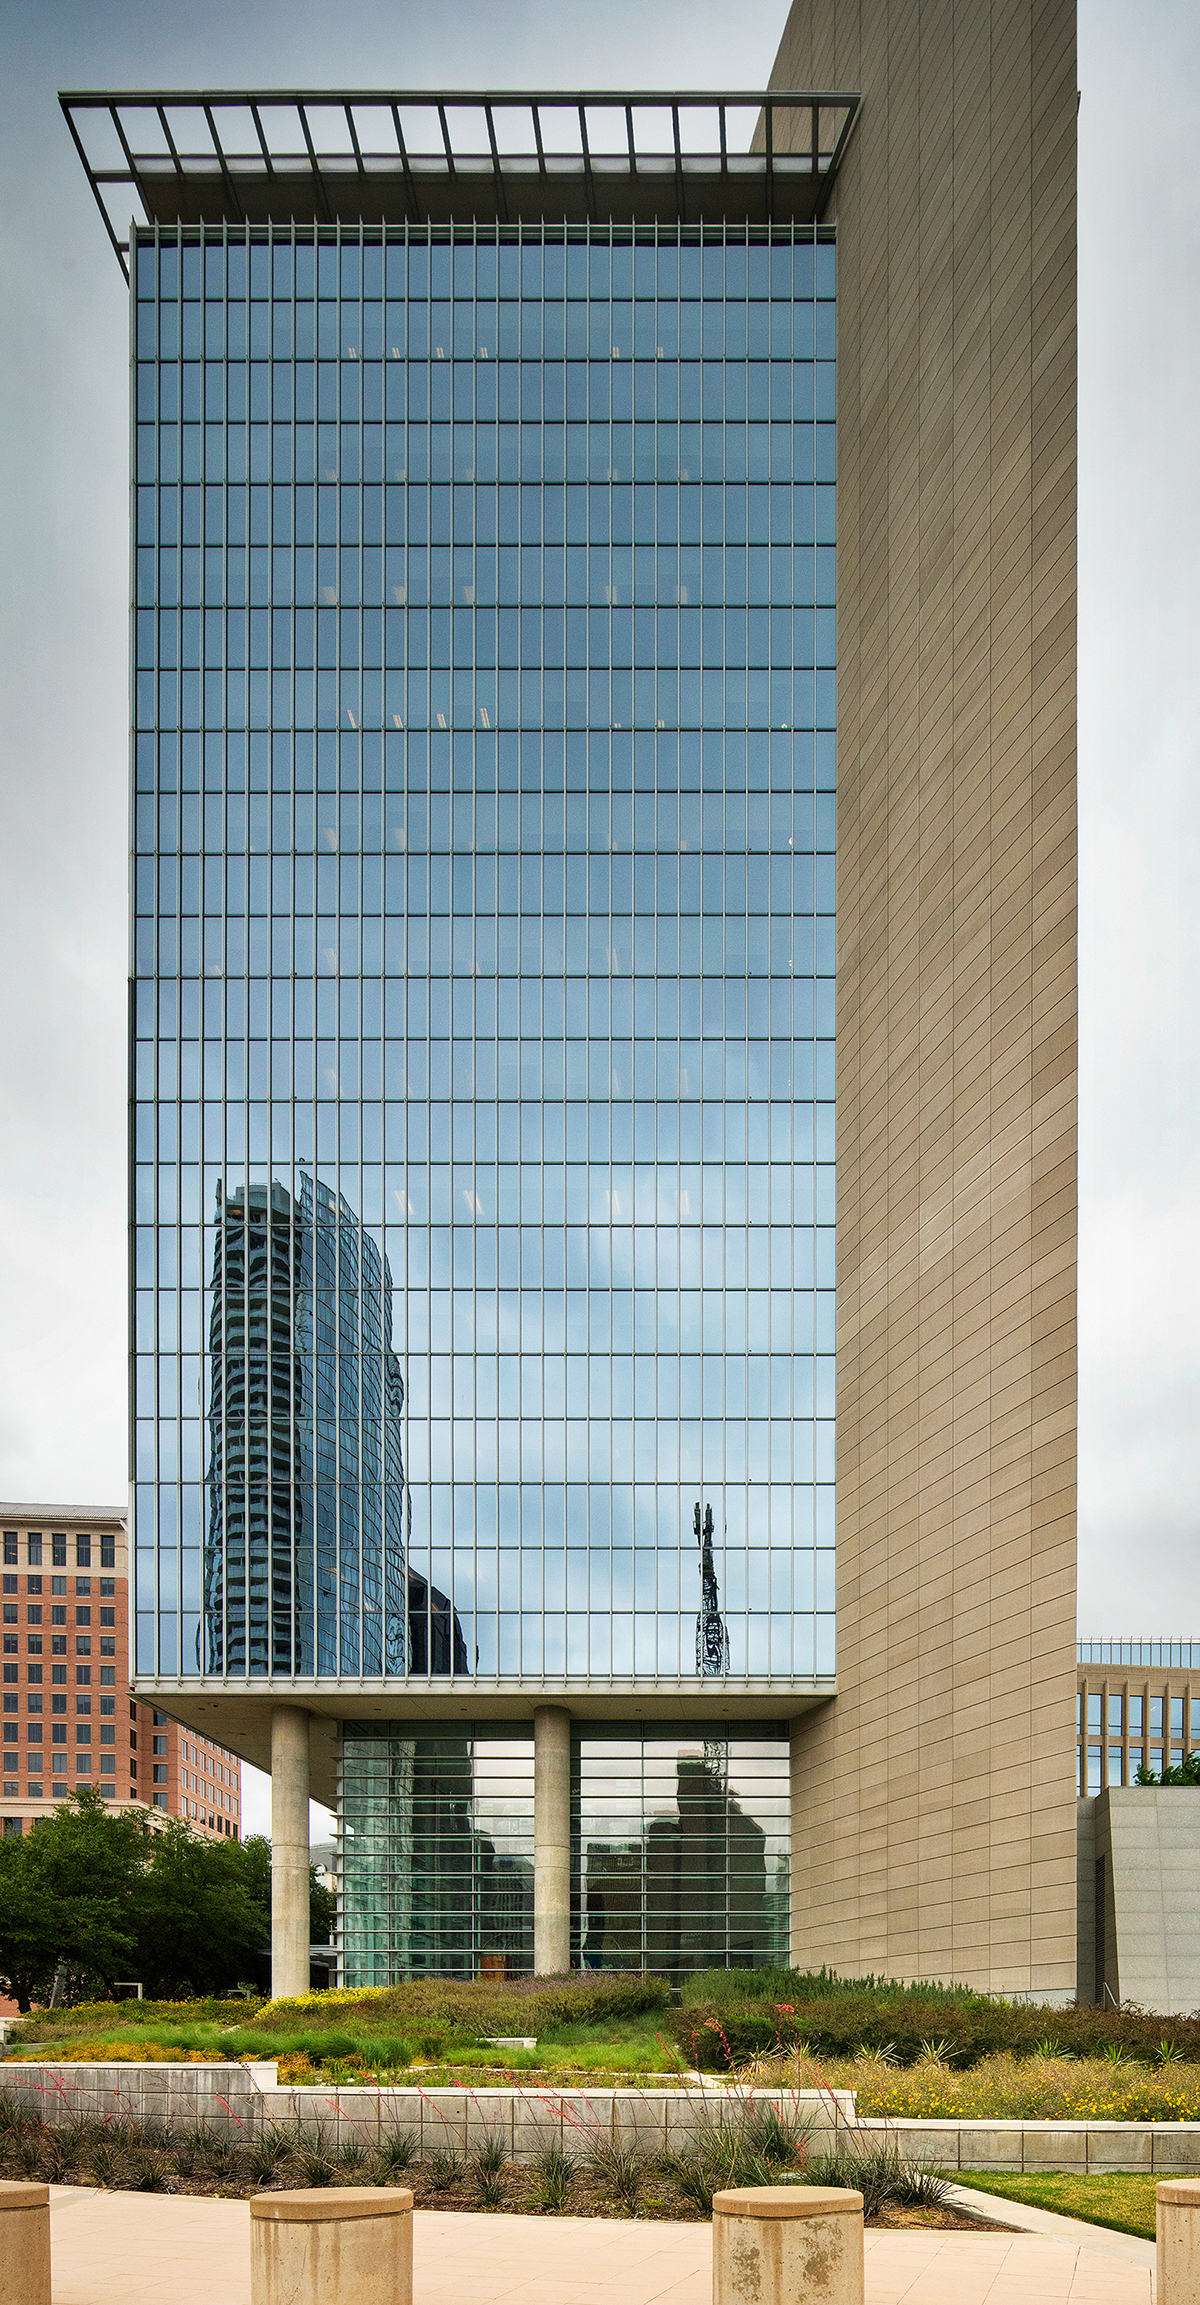 dallas texas Significant Architecture peterjsieger sieger usa Dallas Texas Various